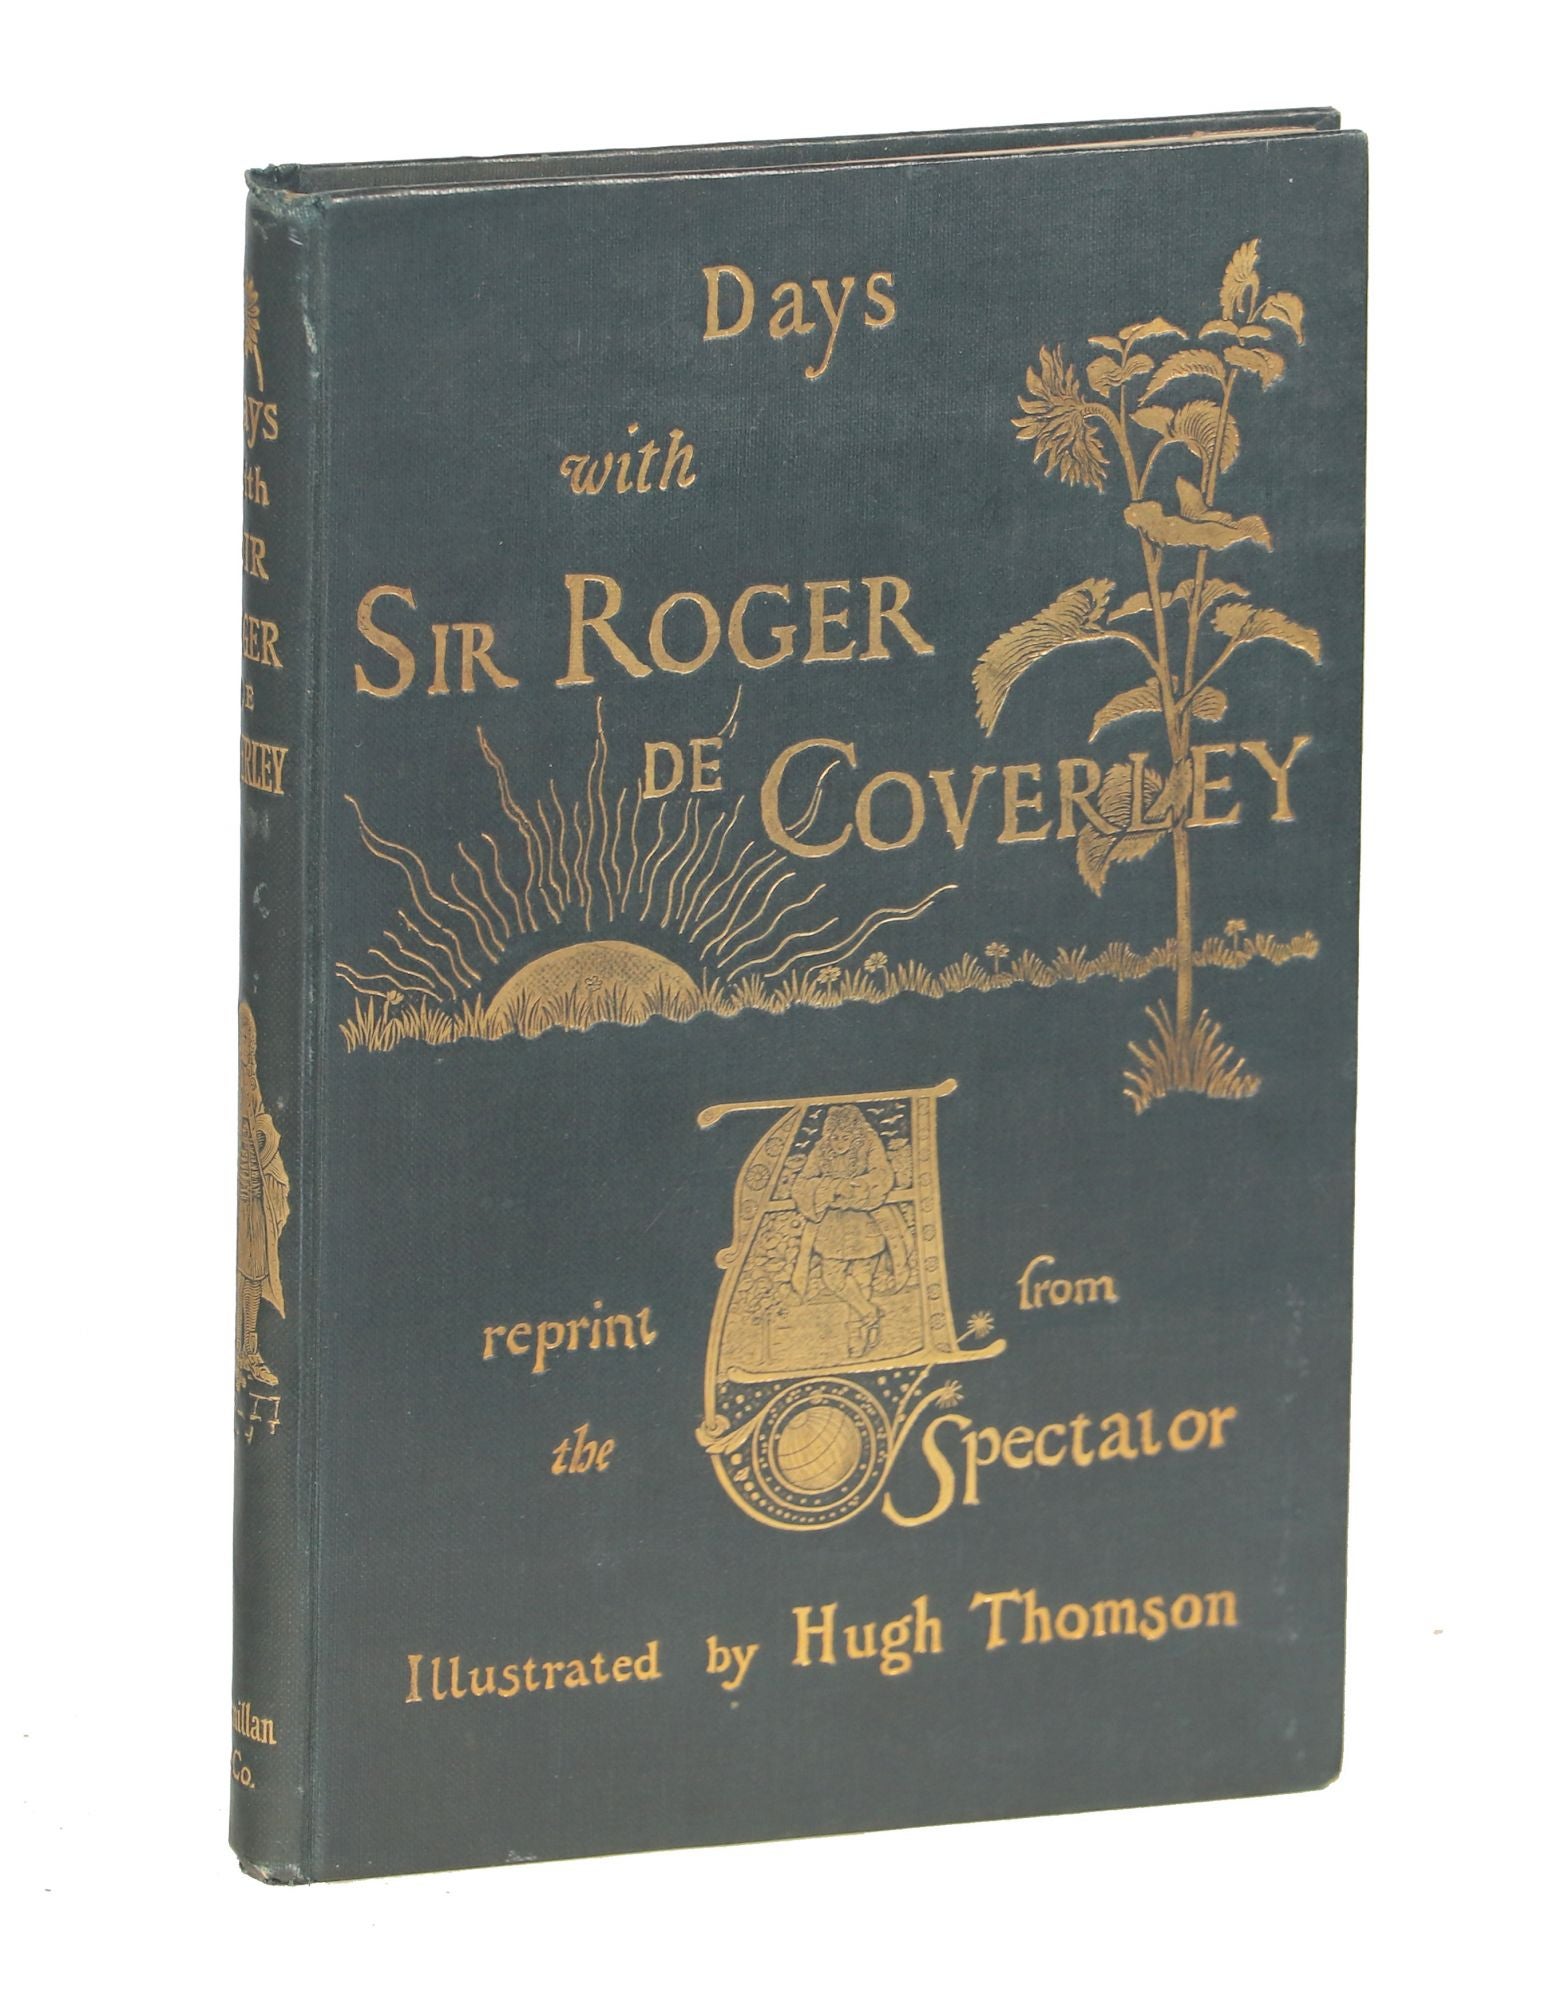 Days with Sir Roger De Coverley: Addison, Joseph: : Books